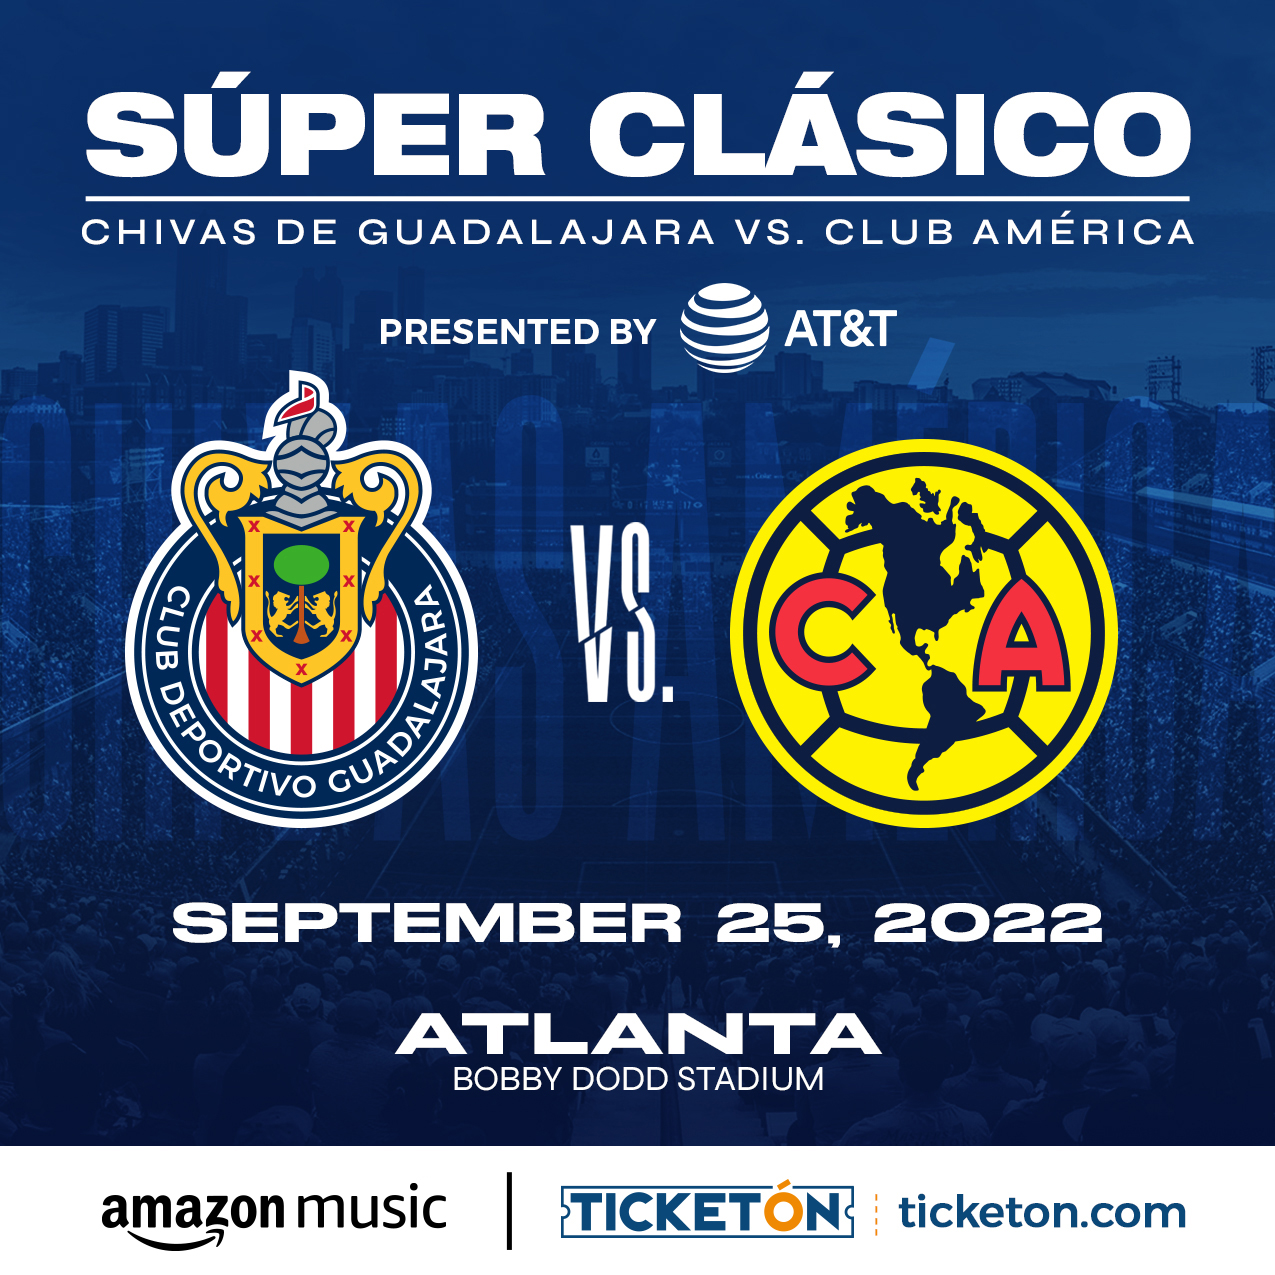 Chivas de Guadalajara vs Club America - Bobby Dodd Stadium Tickets Boletos  | Atlanta, GA - 09/25/22